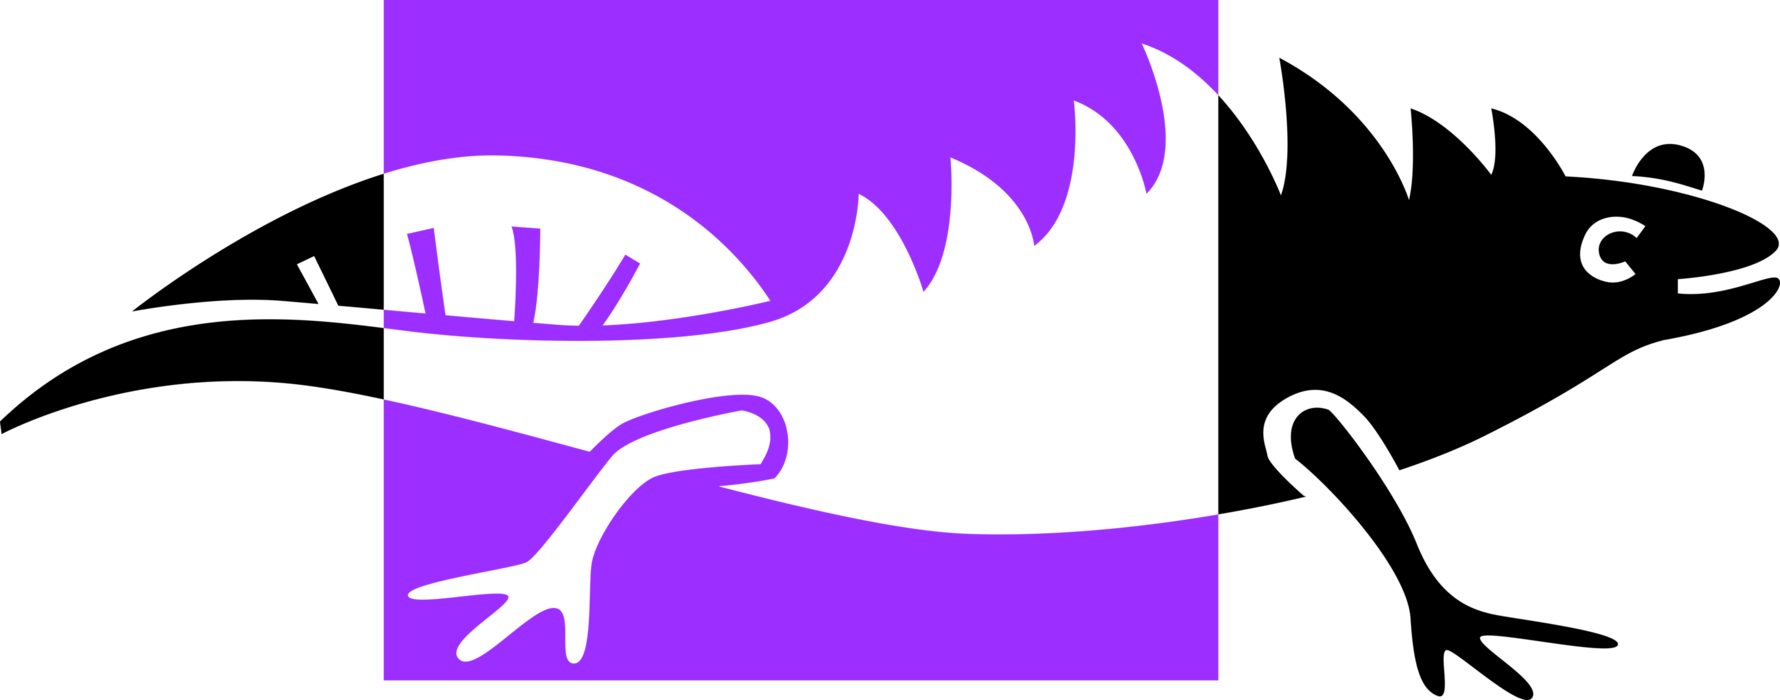 Vector Illustration of Iguana Reptile Lizard